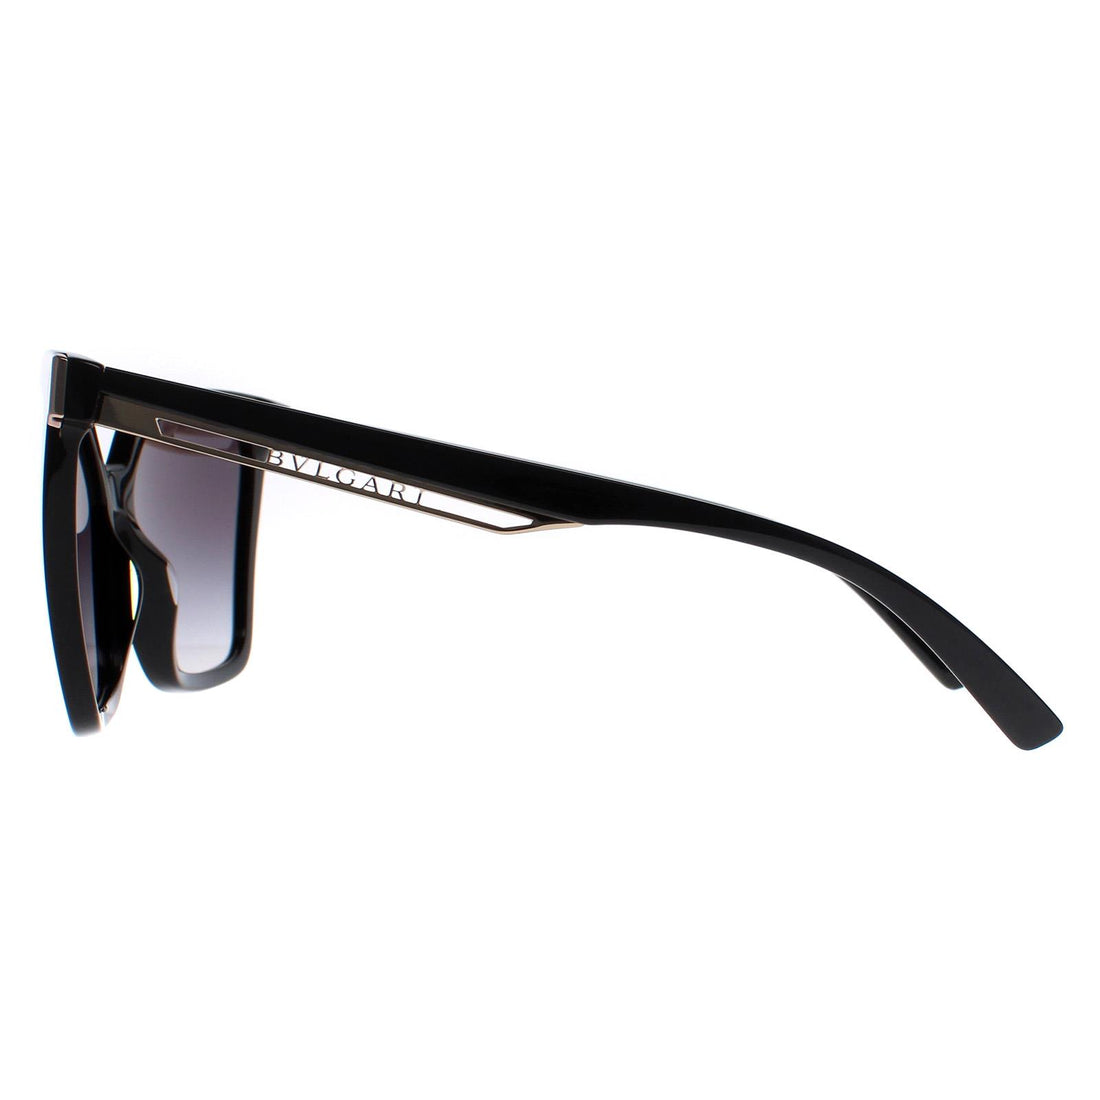 Bvlgari Sunglasses BV8253 501/8G Black Grey Gradient